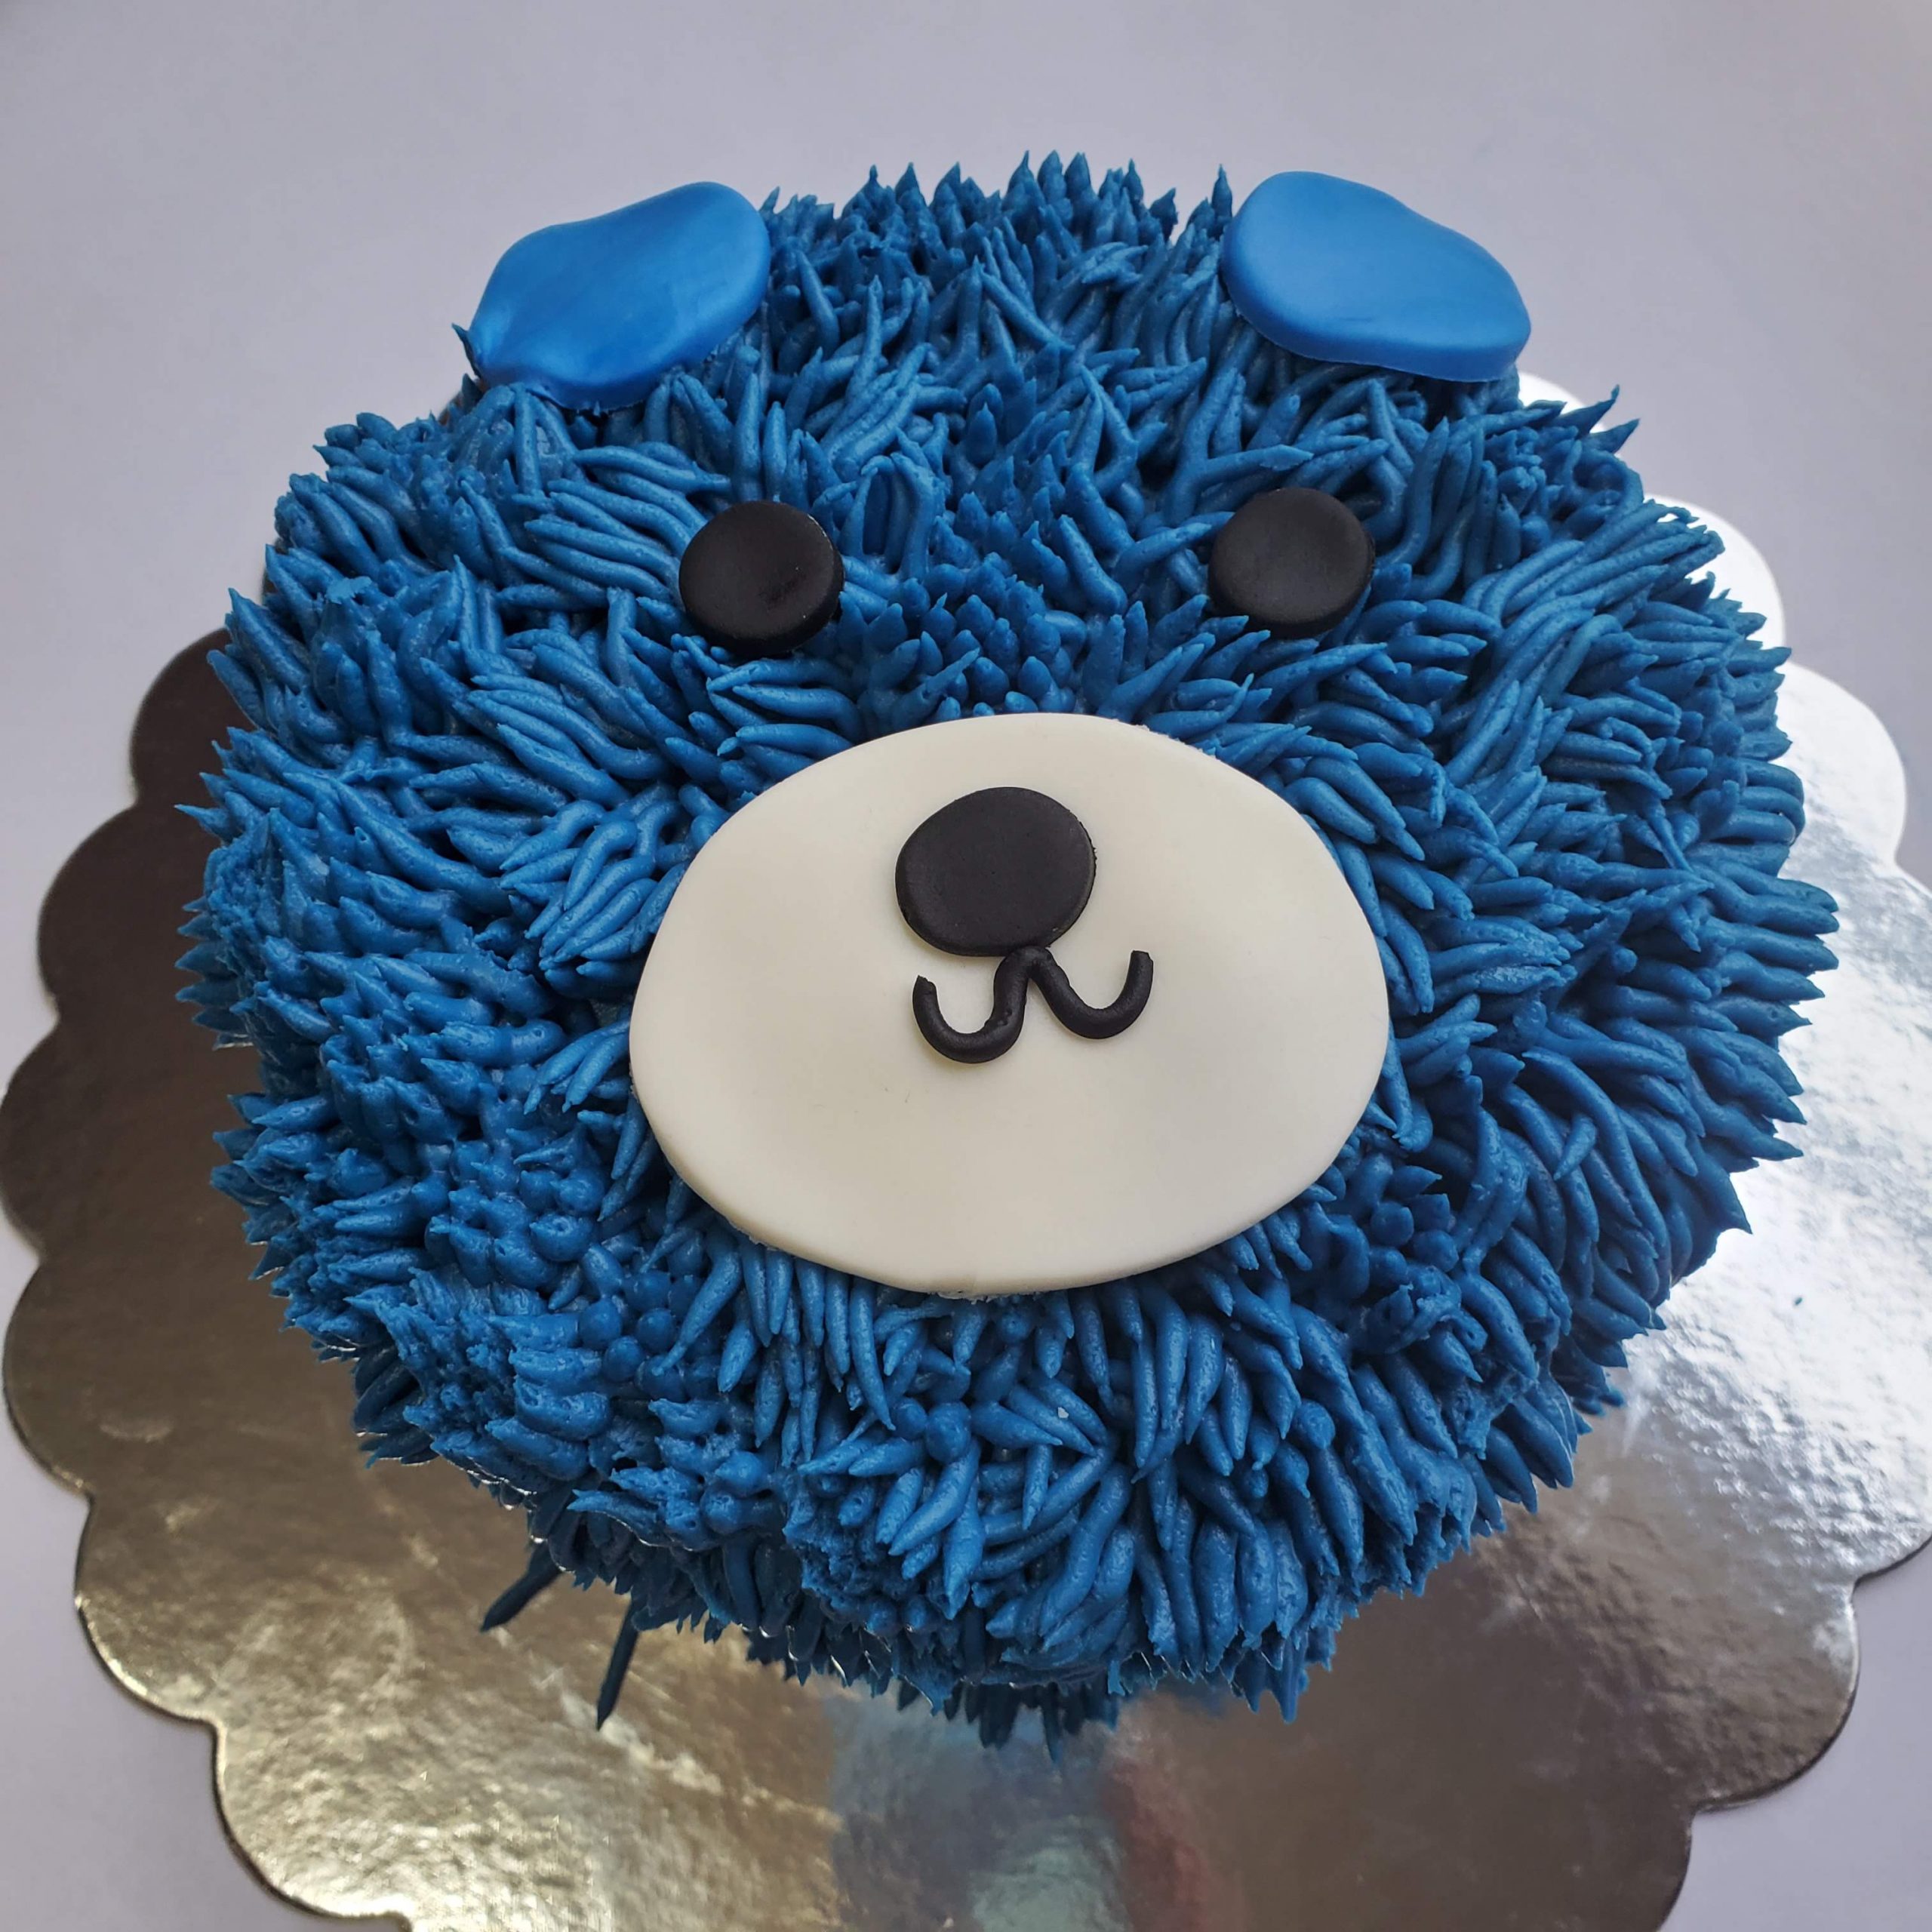 Grizz the teddy bear birthday cake - NZ Herald